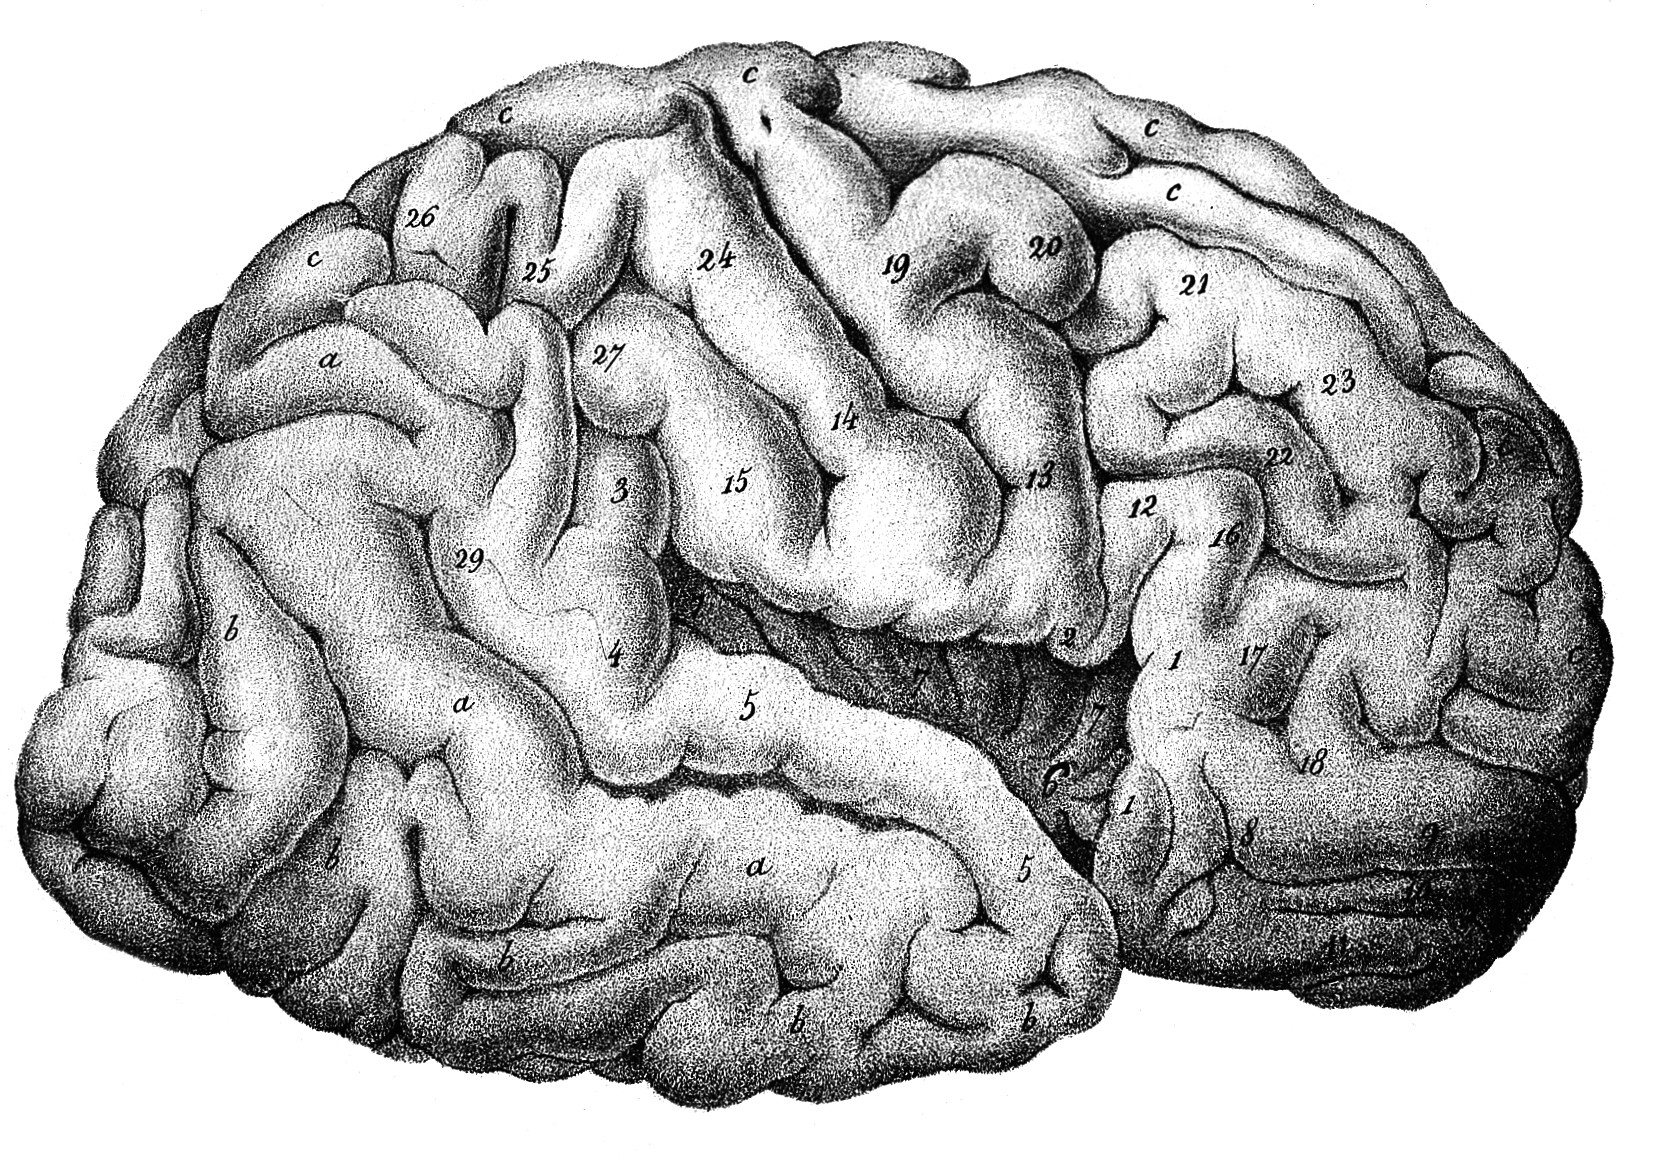 Brain structure. Структура мозга Кортекс. Строение мозга неокортекс. Рептильный мозг. Доли неокортекса.